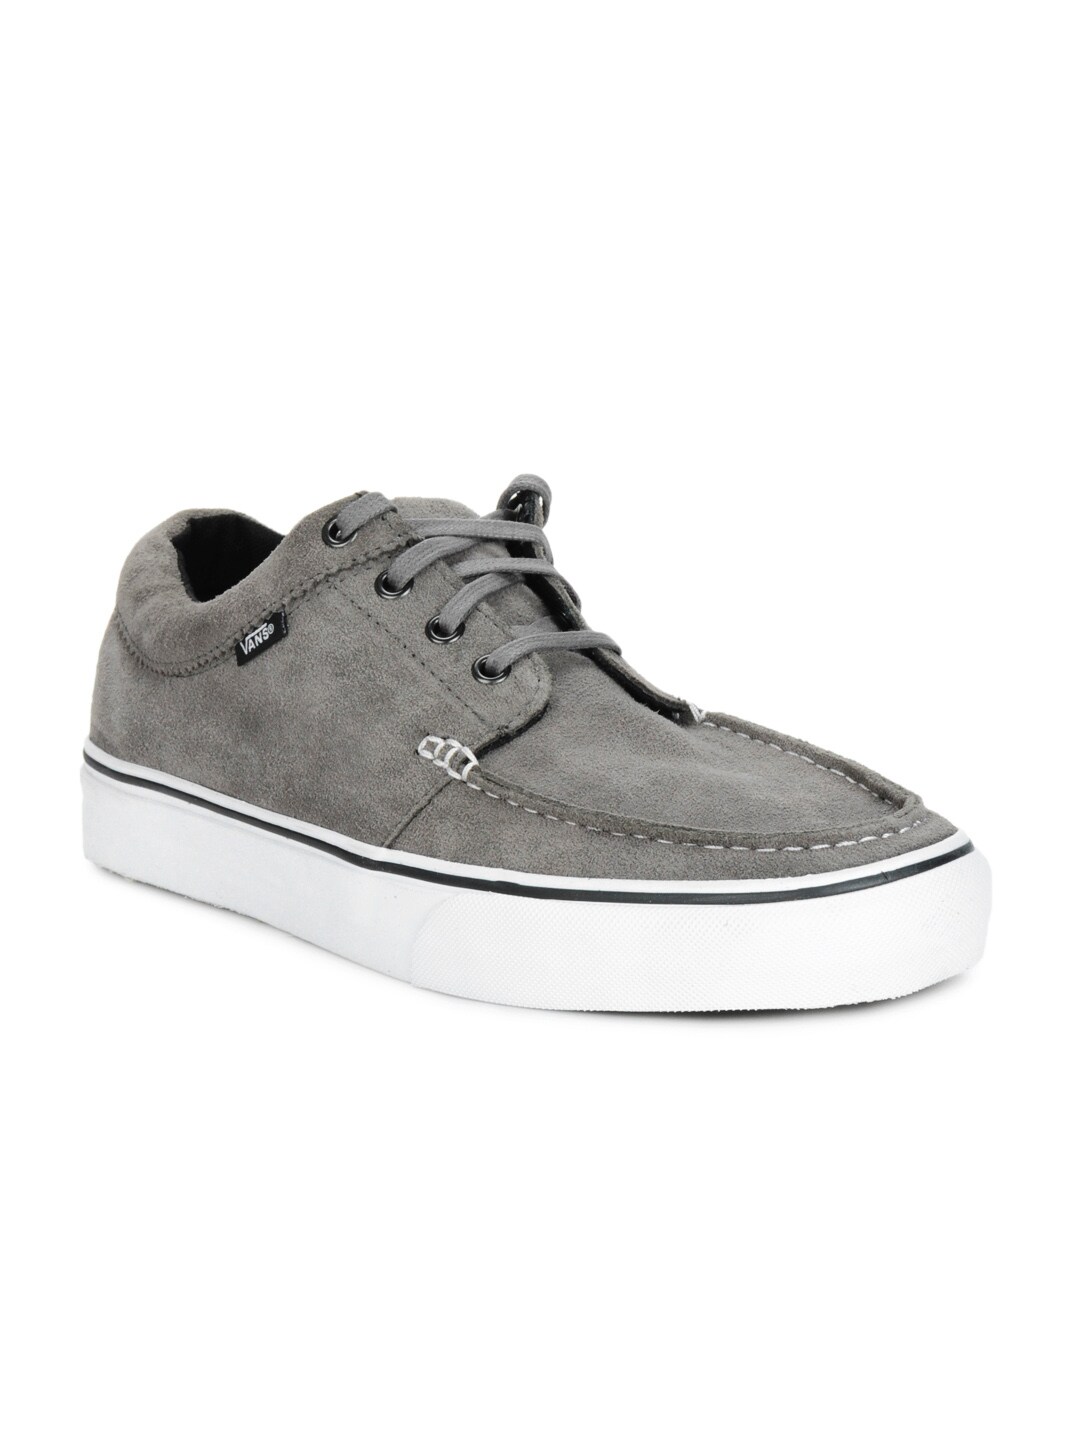 Vans Men Grey Shoes